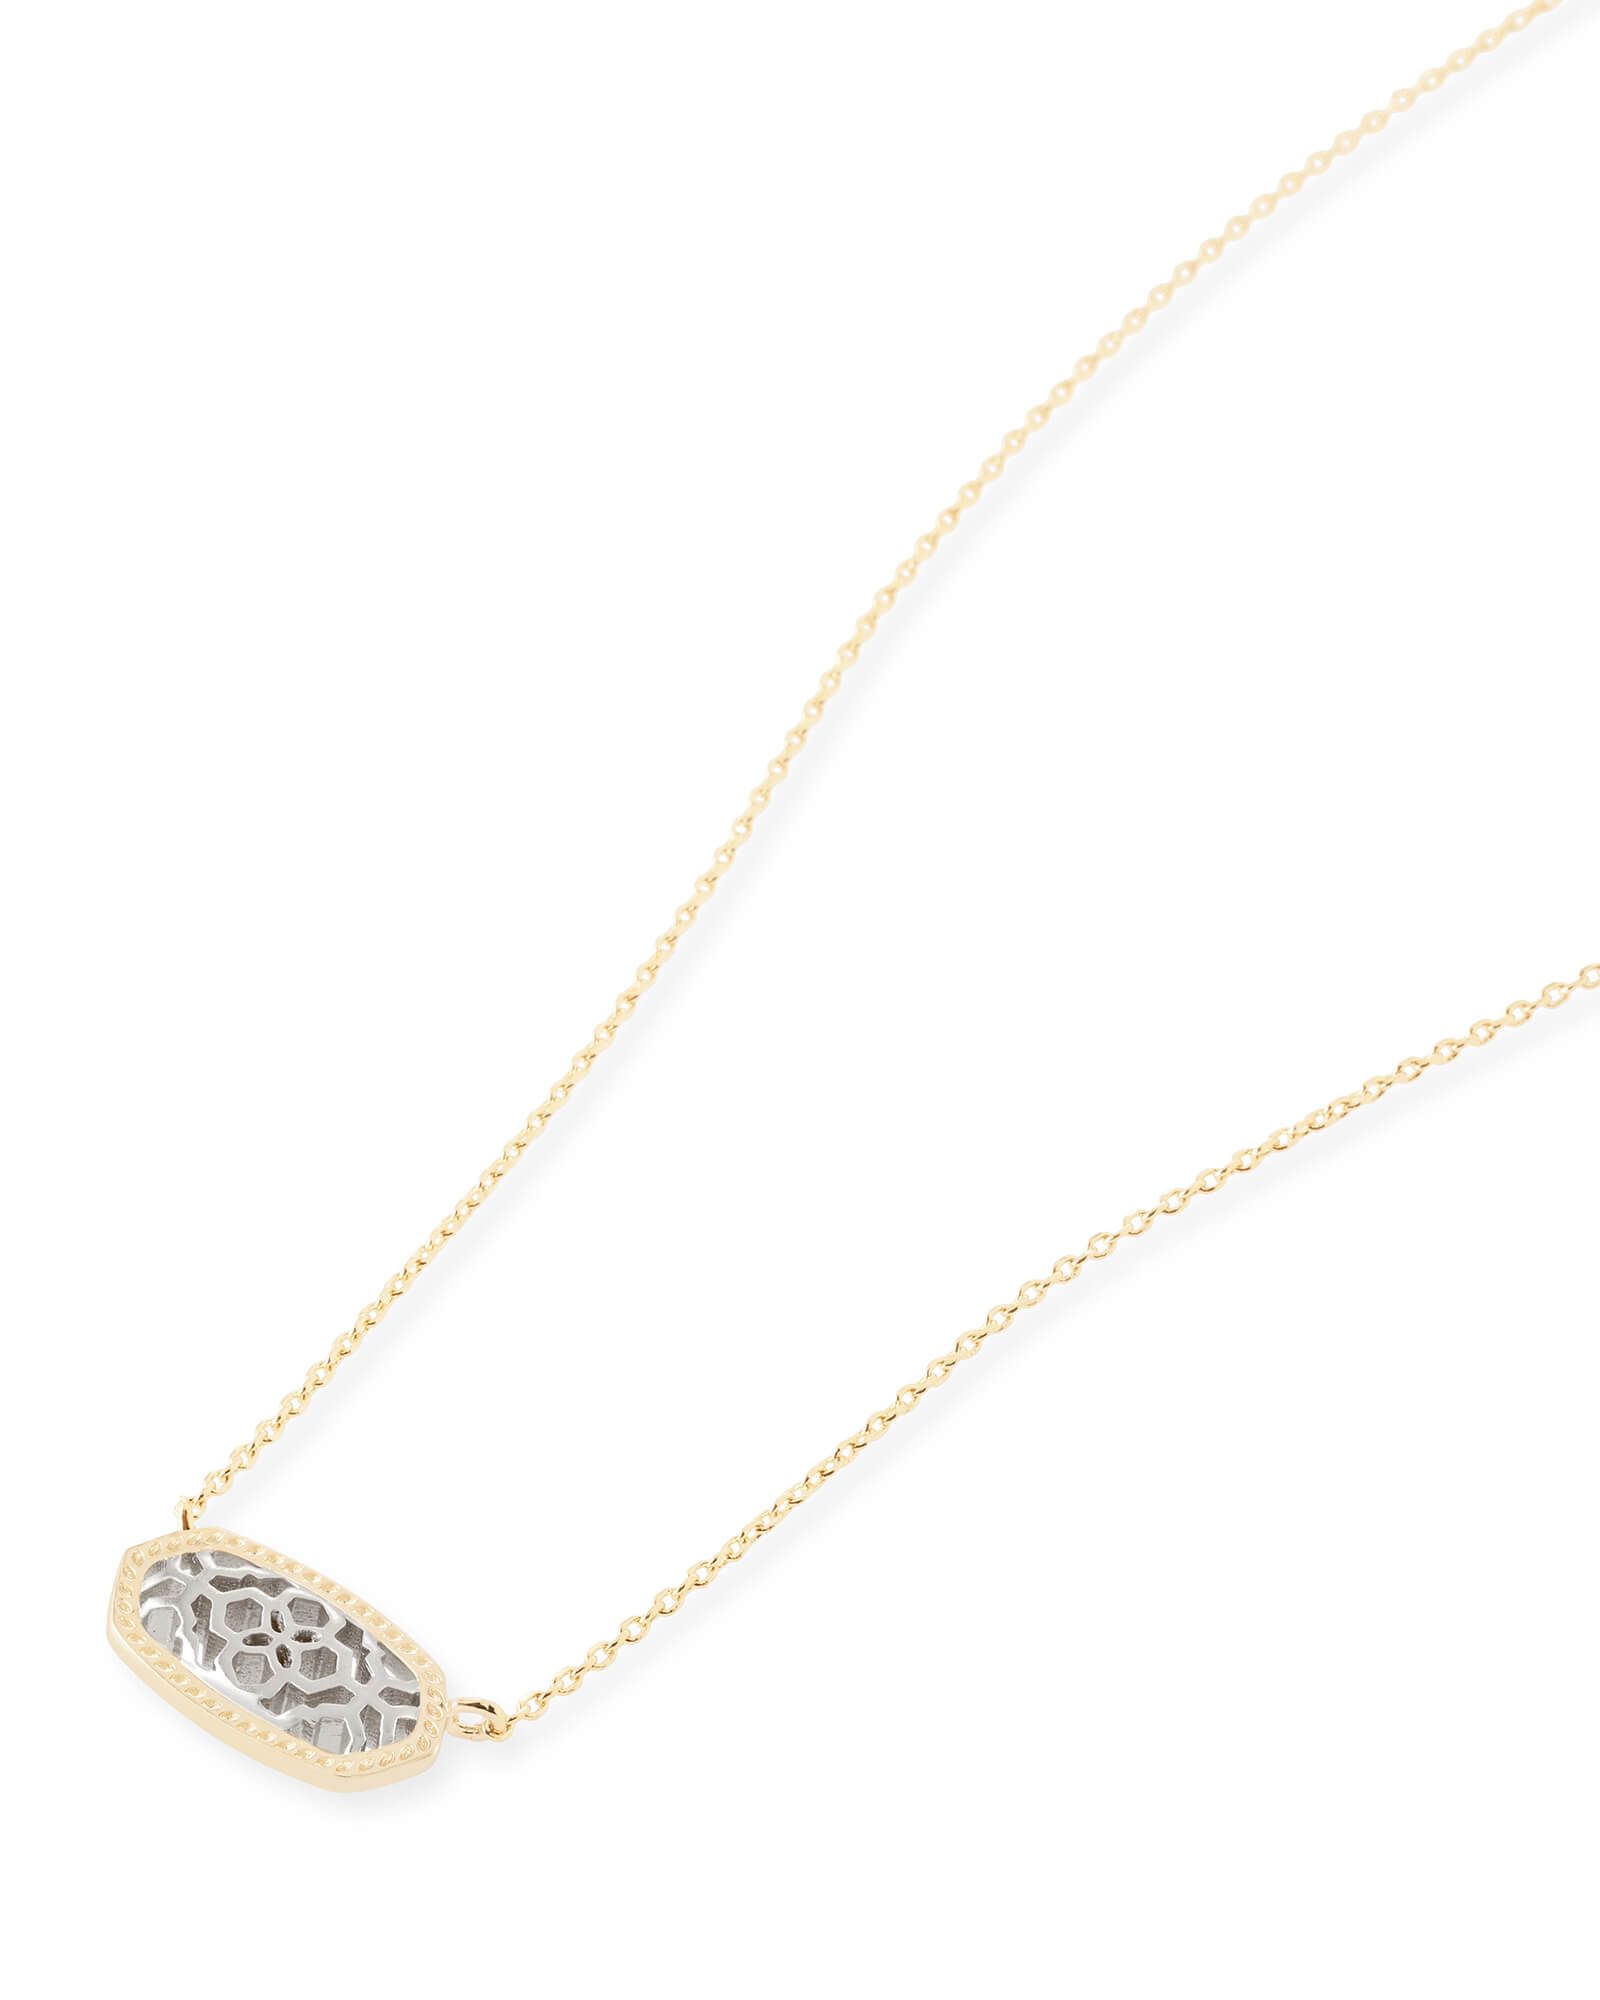 Elisa Gold Pendant Necklace in Silver Filigree | Kendra Scott